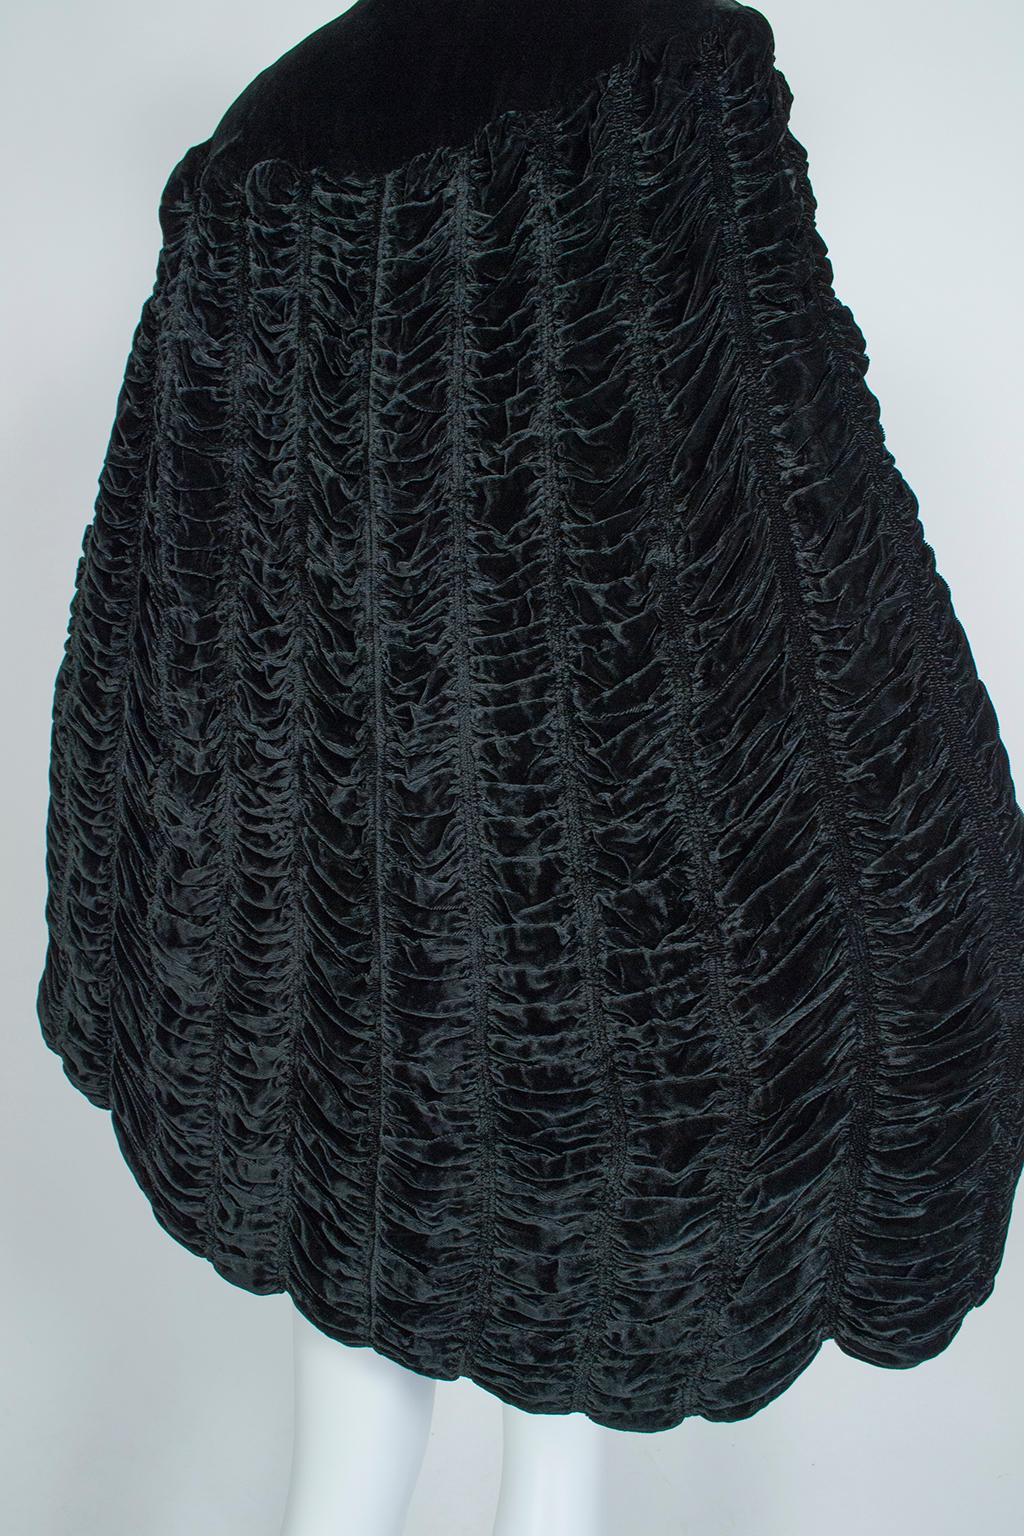 Black Regency Ruched and Scalloped Silk Velvet Pelerine Mantle Cape - S-M, 1930s For Sale 3